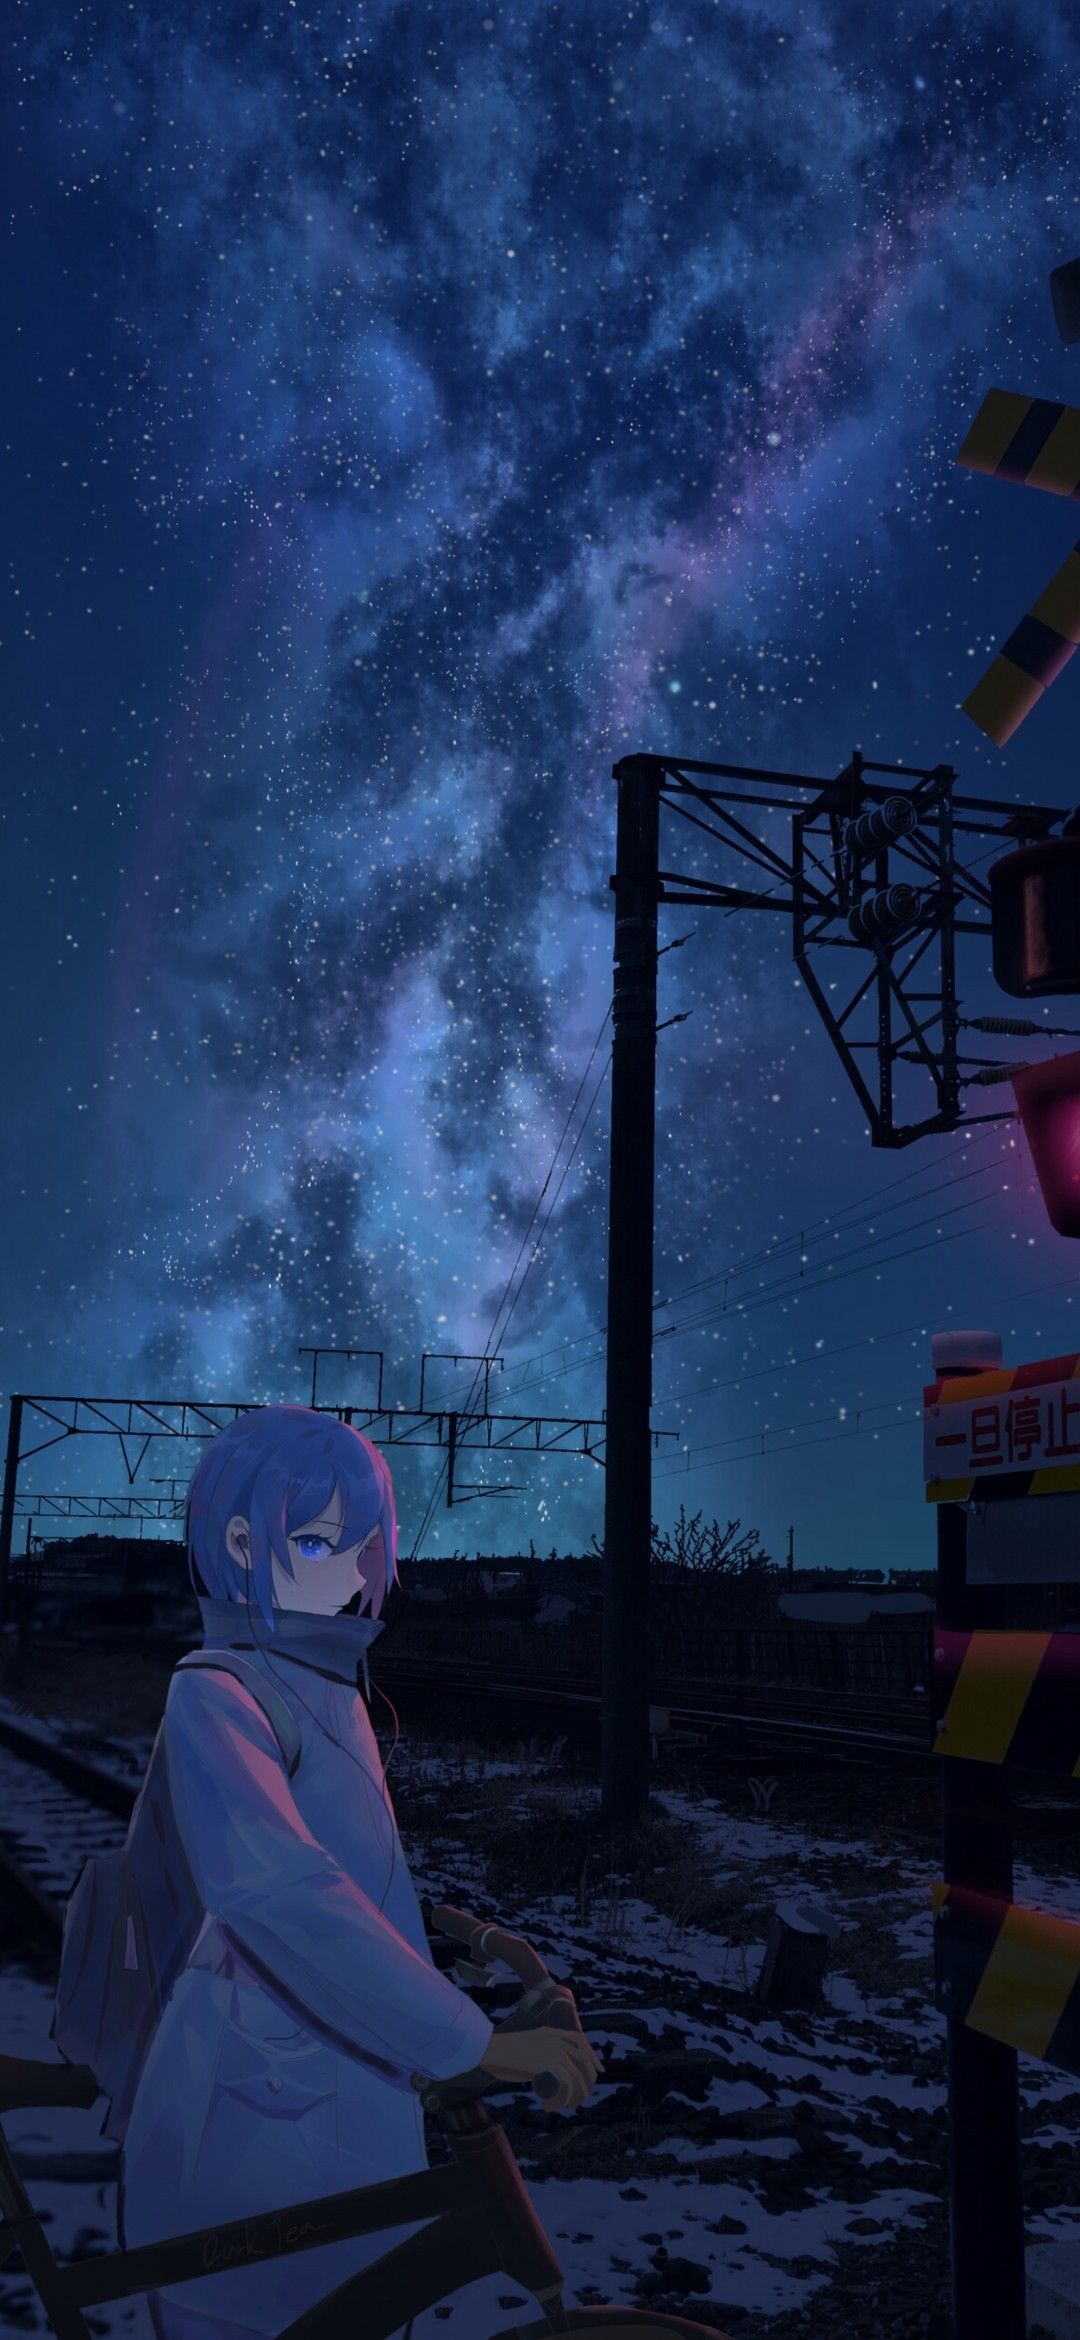 Download 1080x2340 Anime Girl, Stars, Night, Scenic, Railway